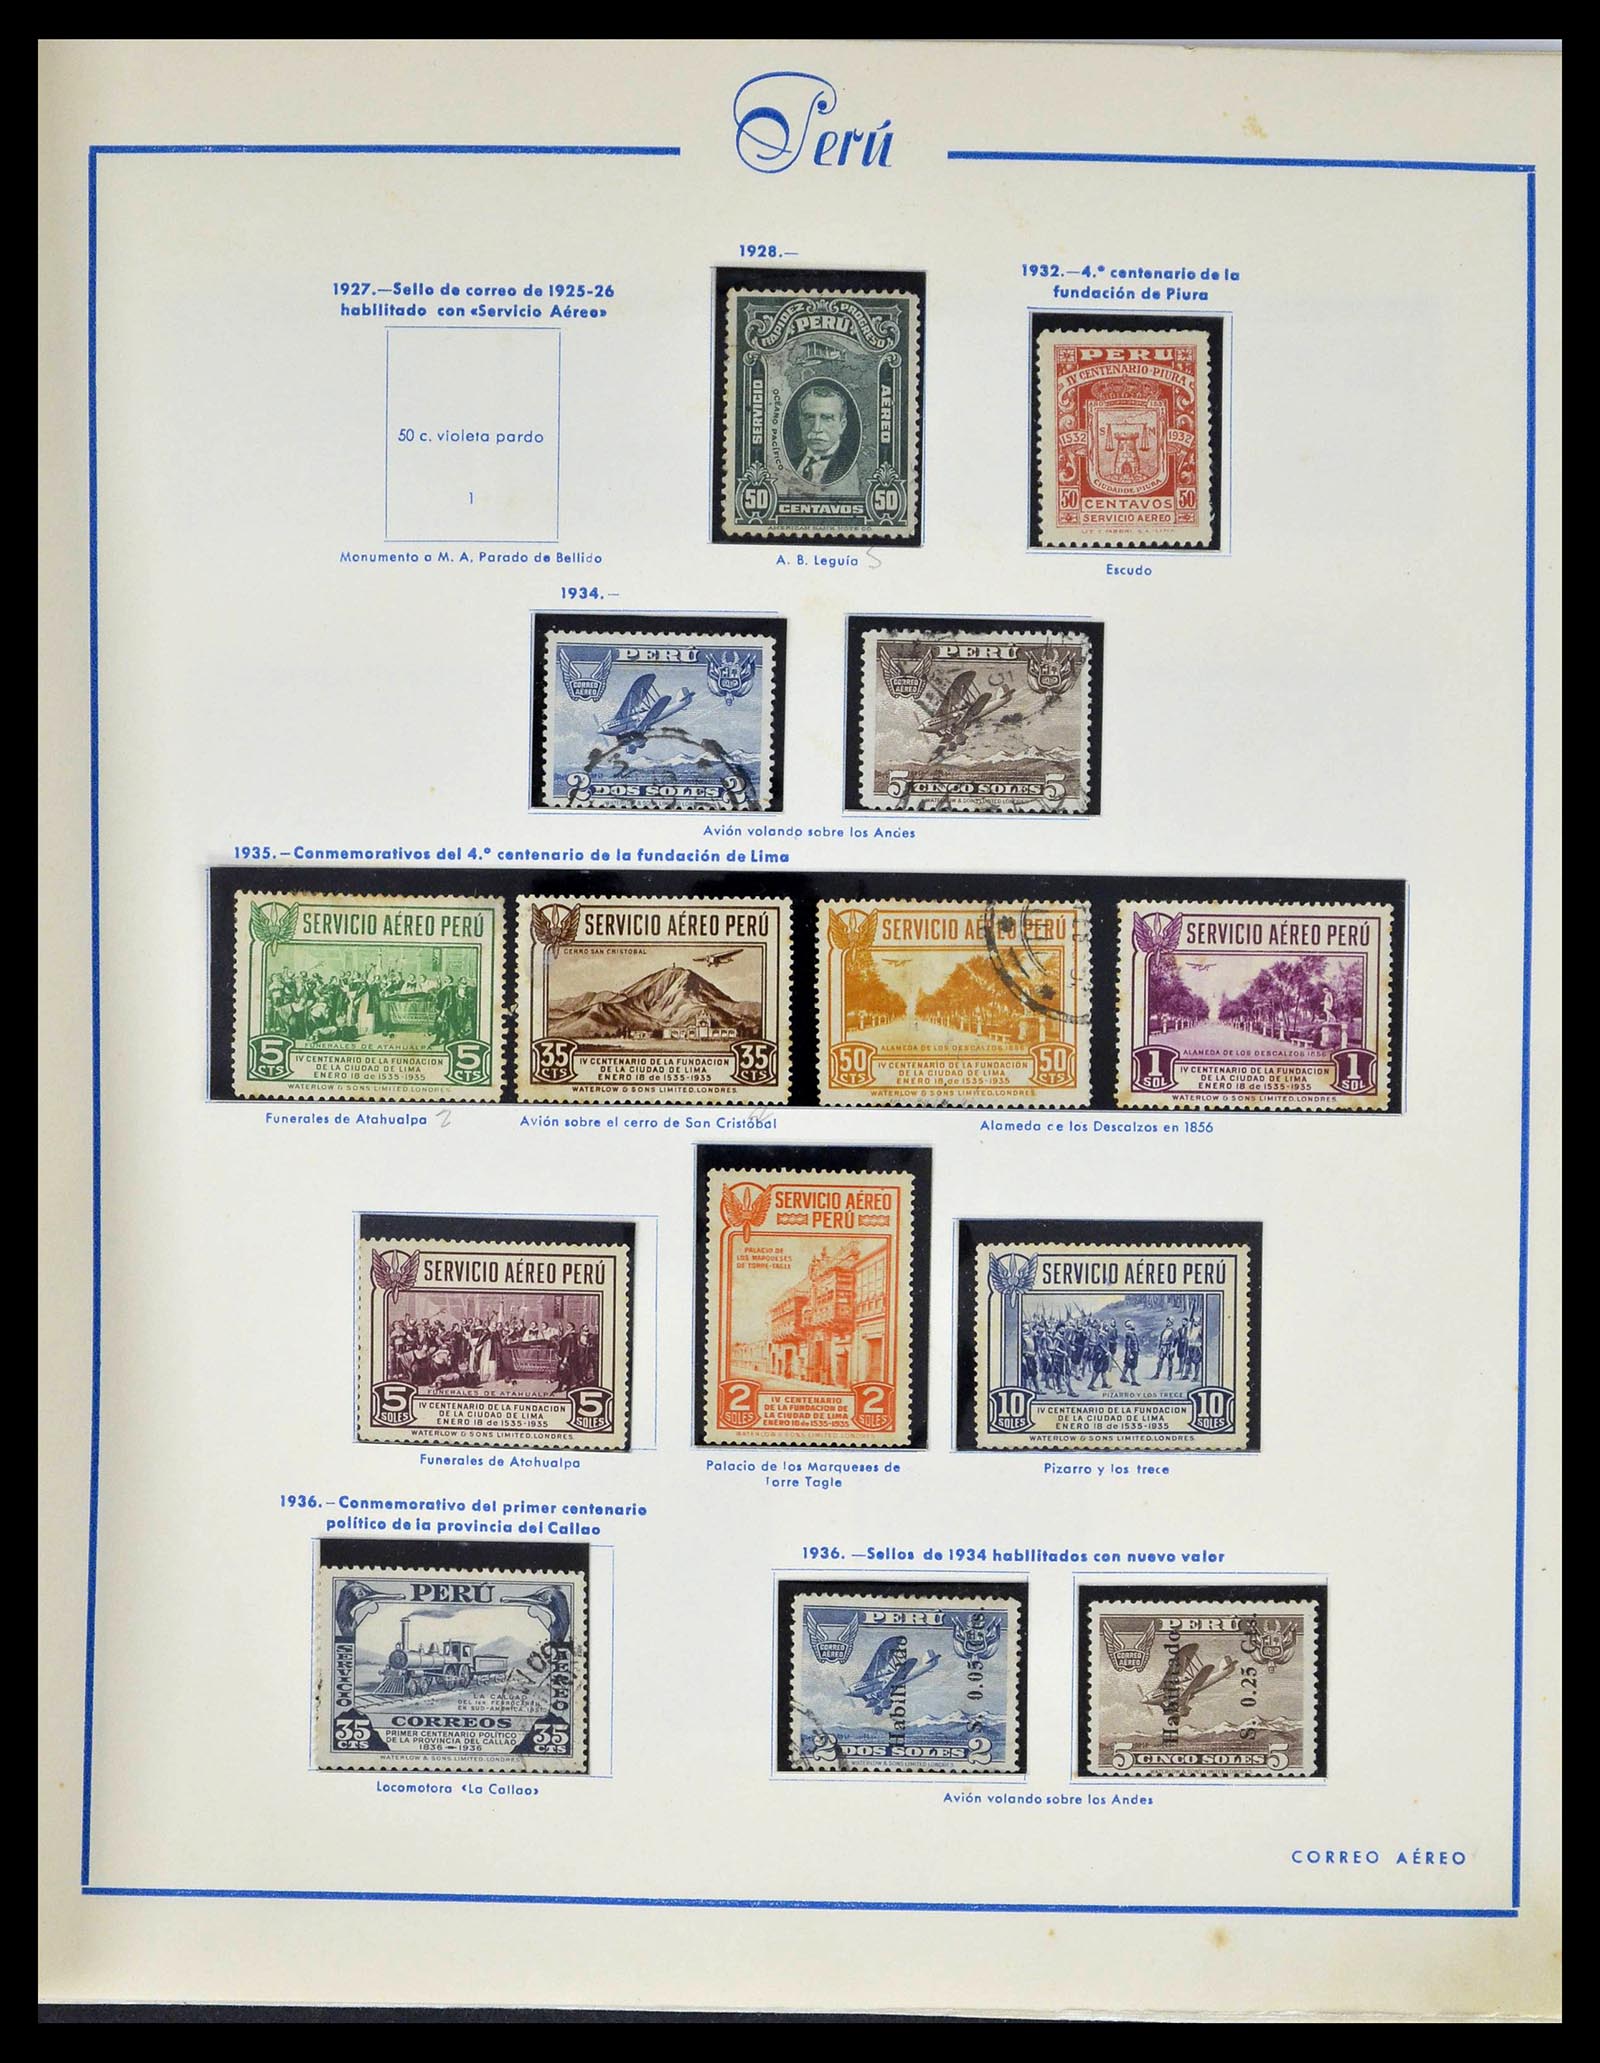 39214 0044 - Stamp collection 39214 Peru 1857-1981.